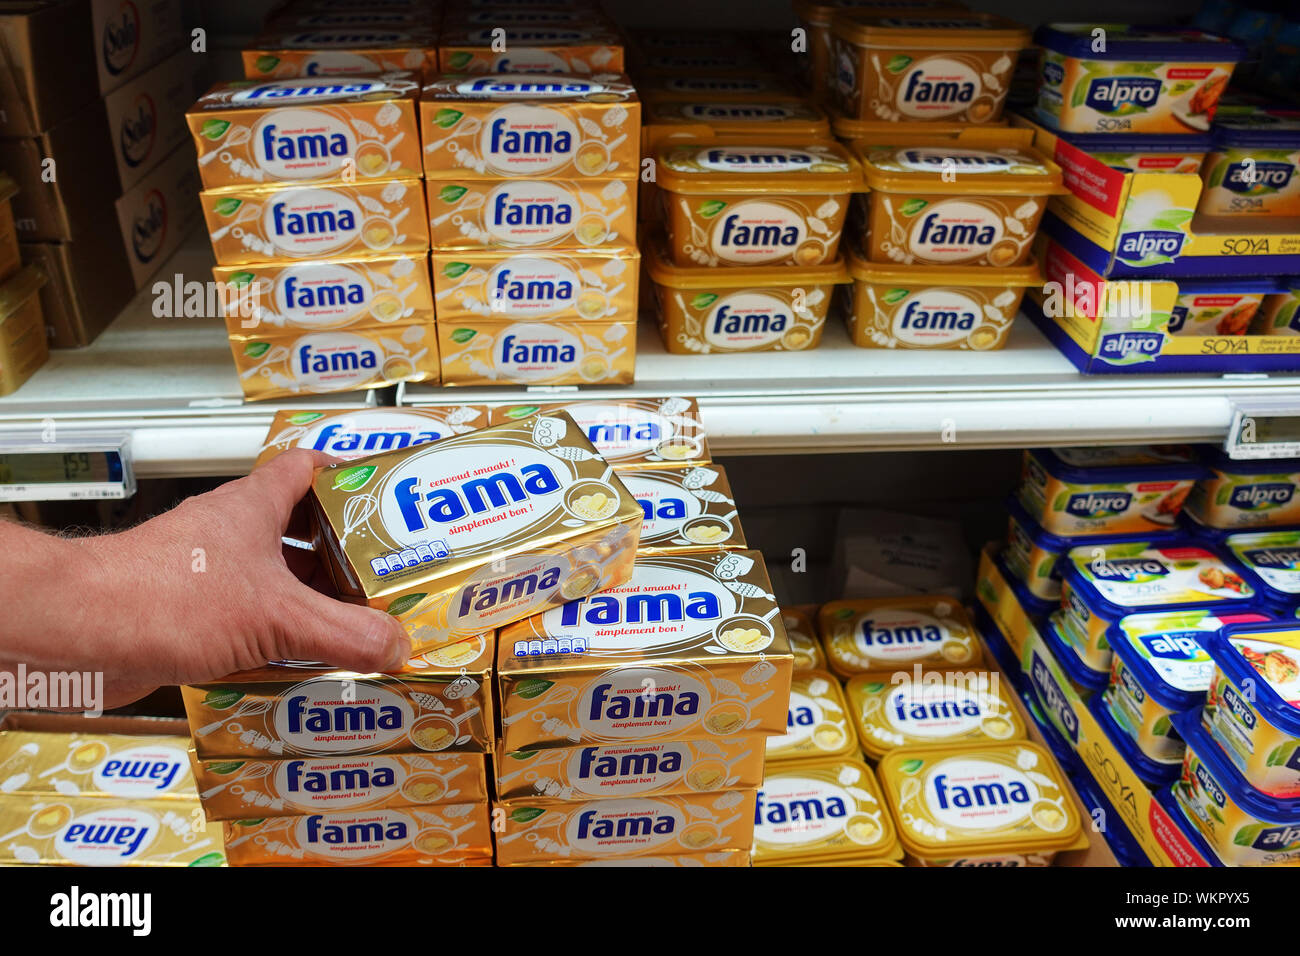 La margarine Fama garnitures dans un magasin Banque D'Images